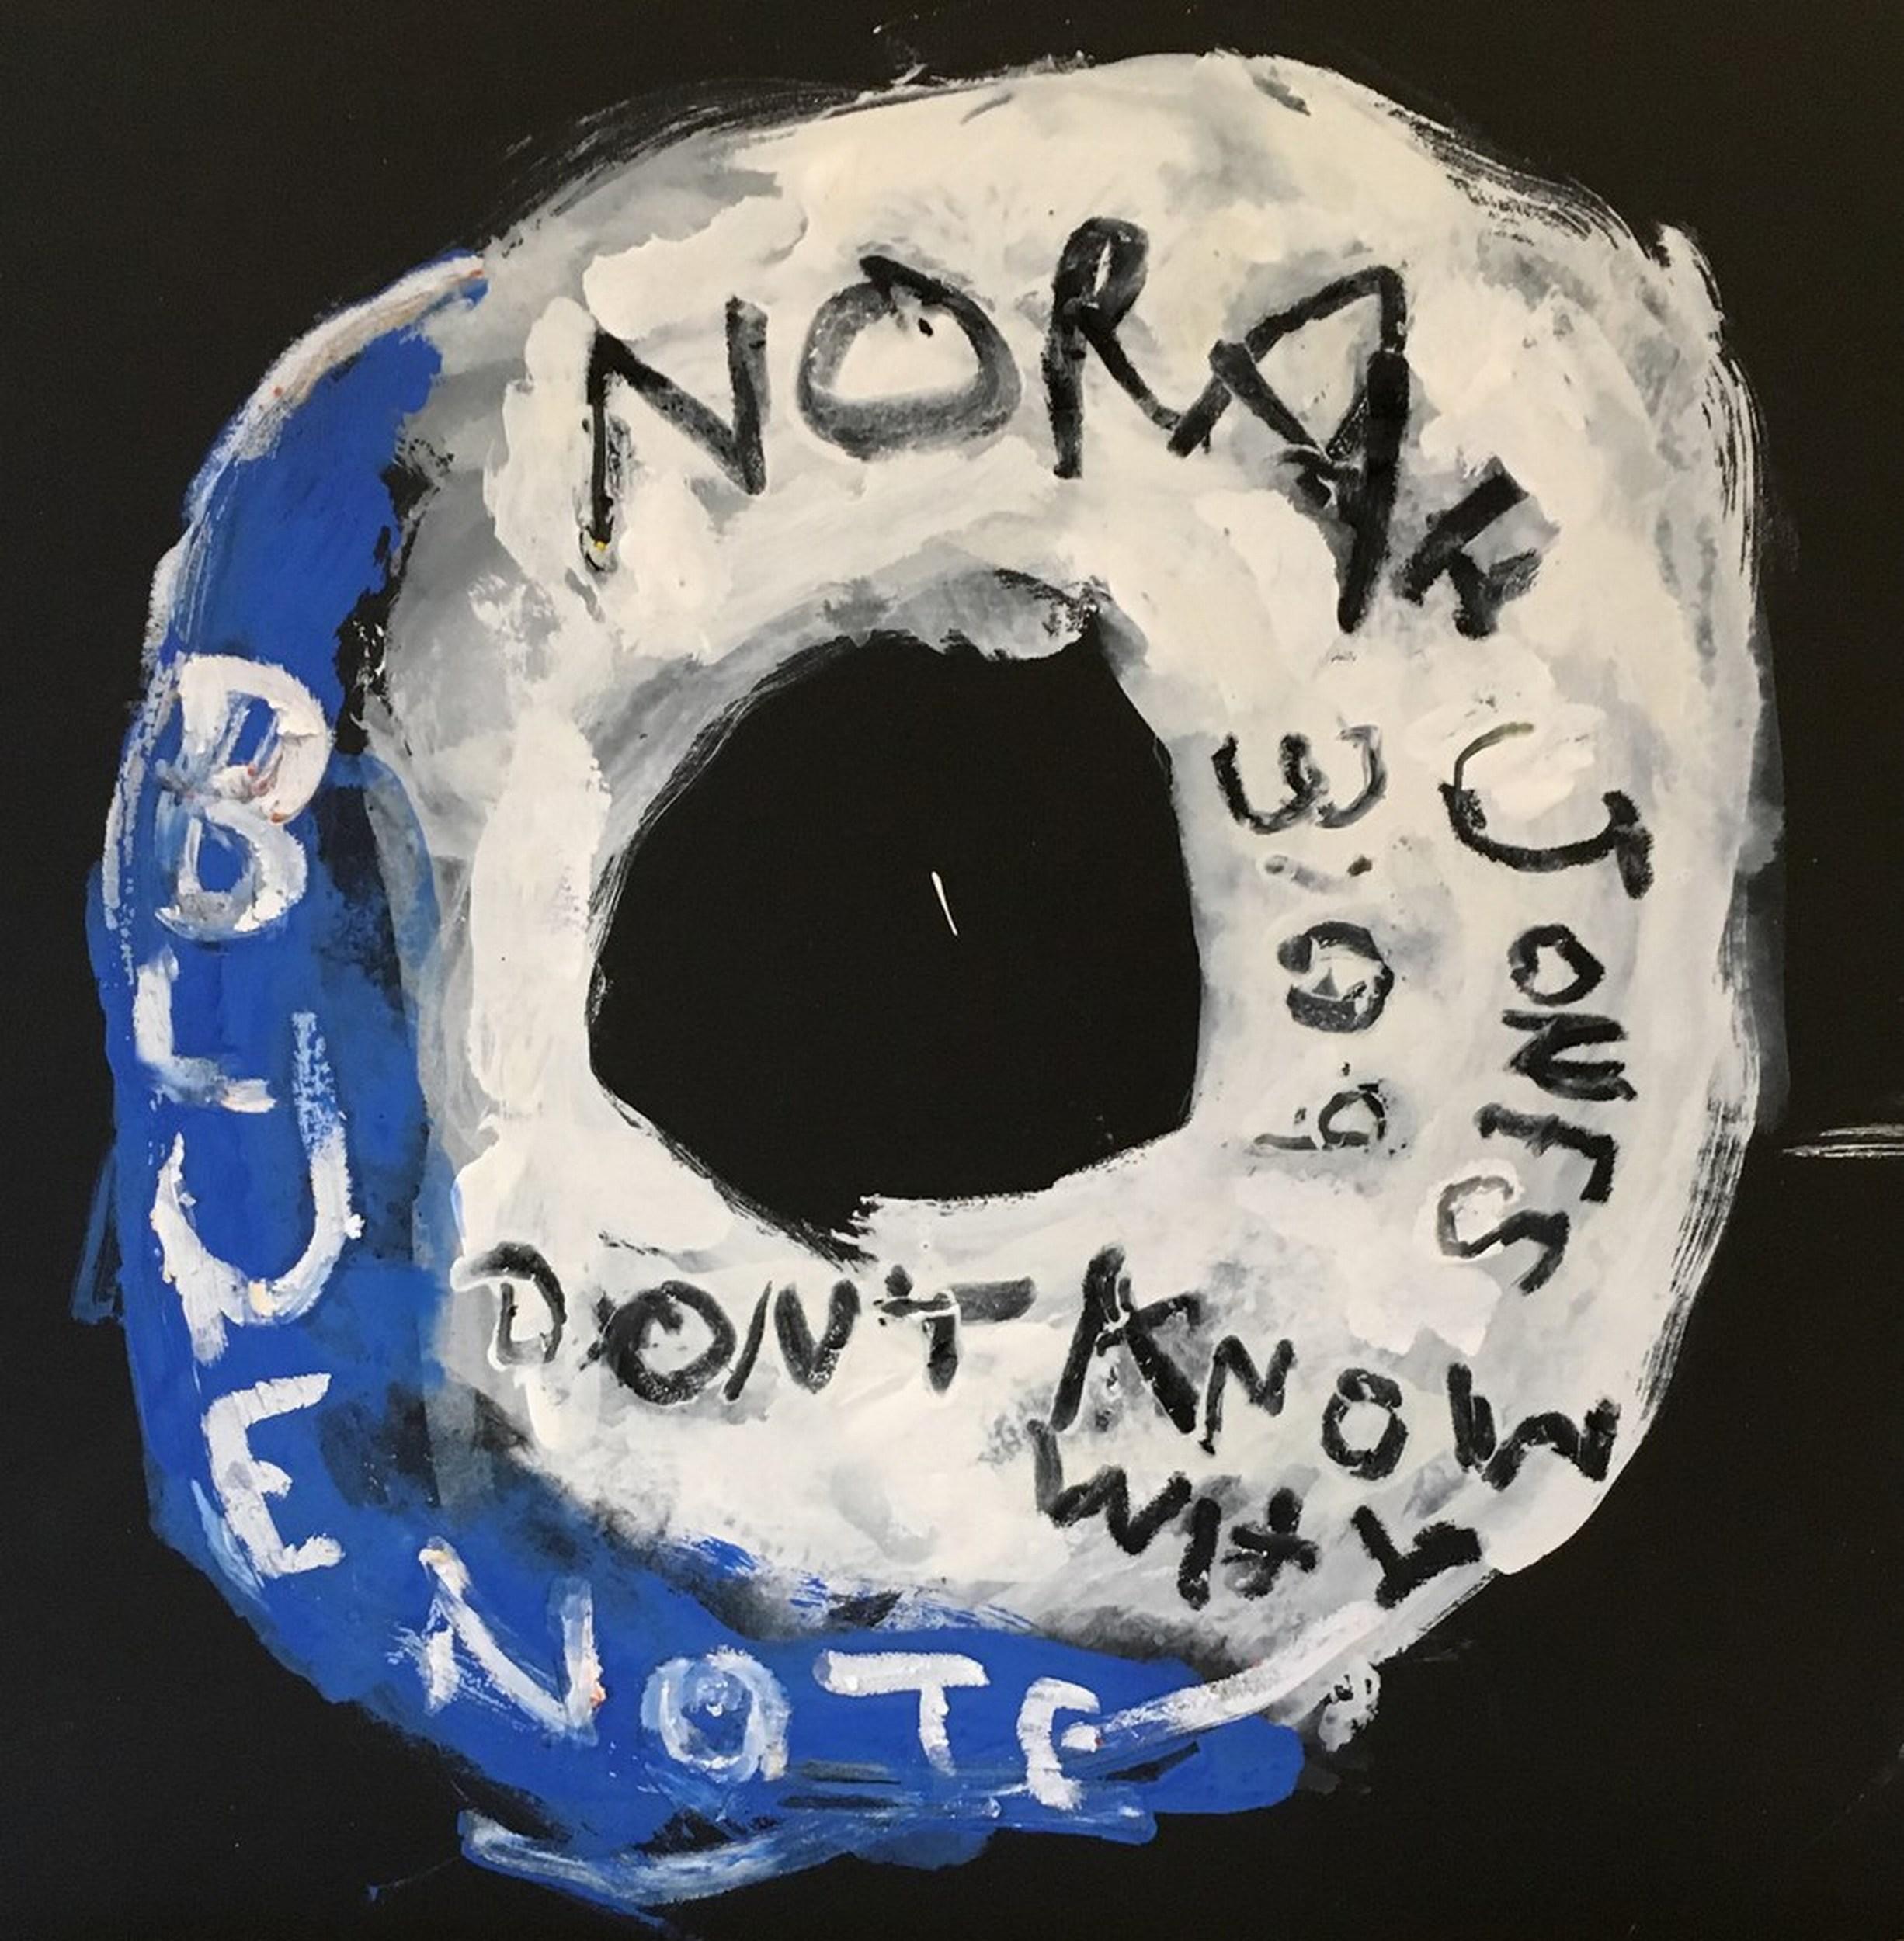 Kerry Smith Figurative Painting – Norah Jones - Don't Know Why (Plattenlabel, Ticketabschnitte, Setlists, Pop Art)